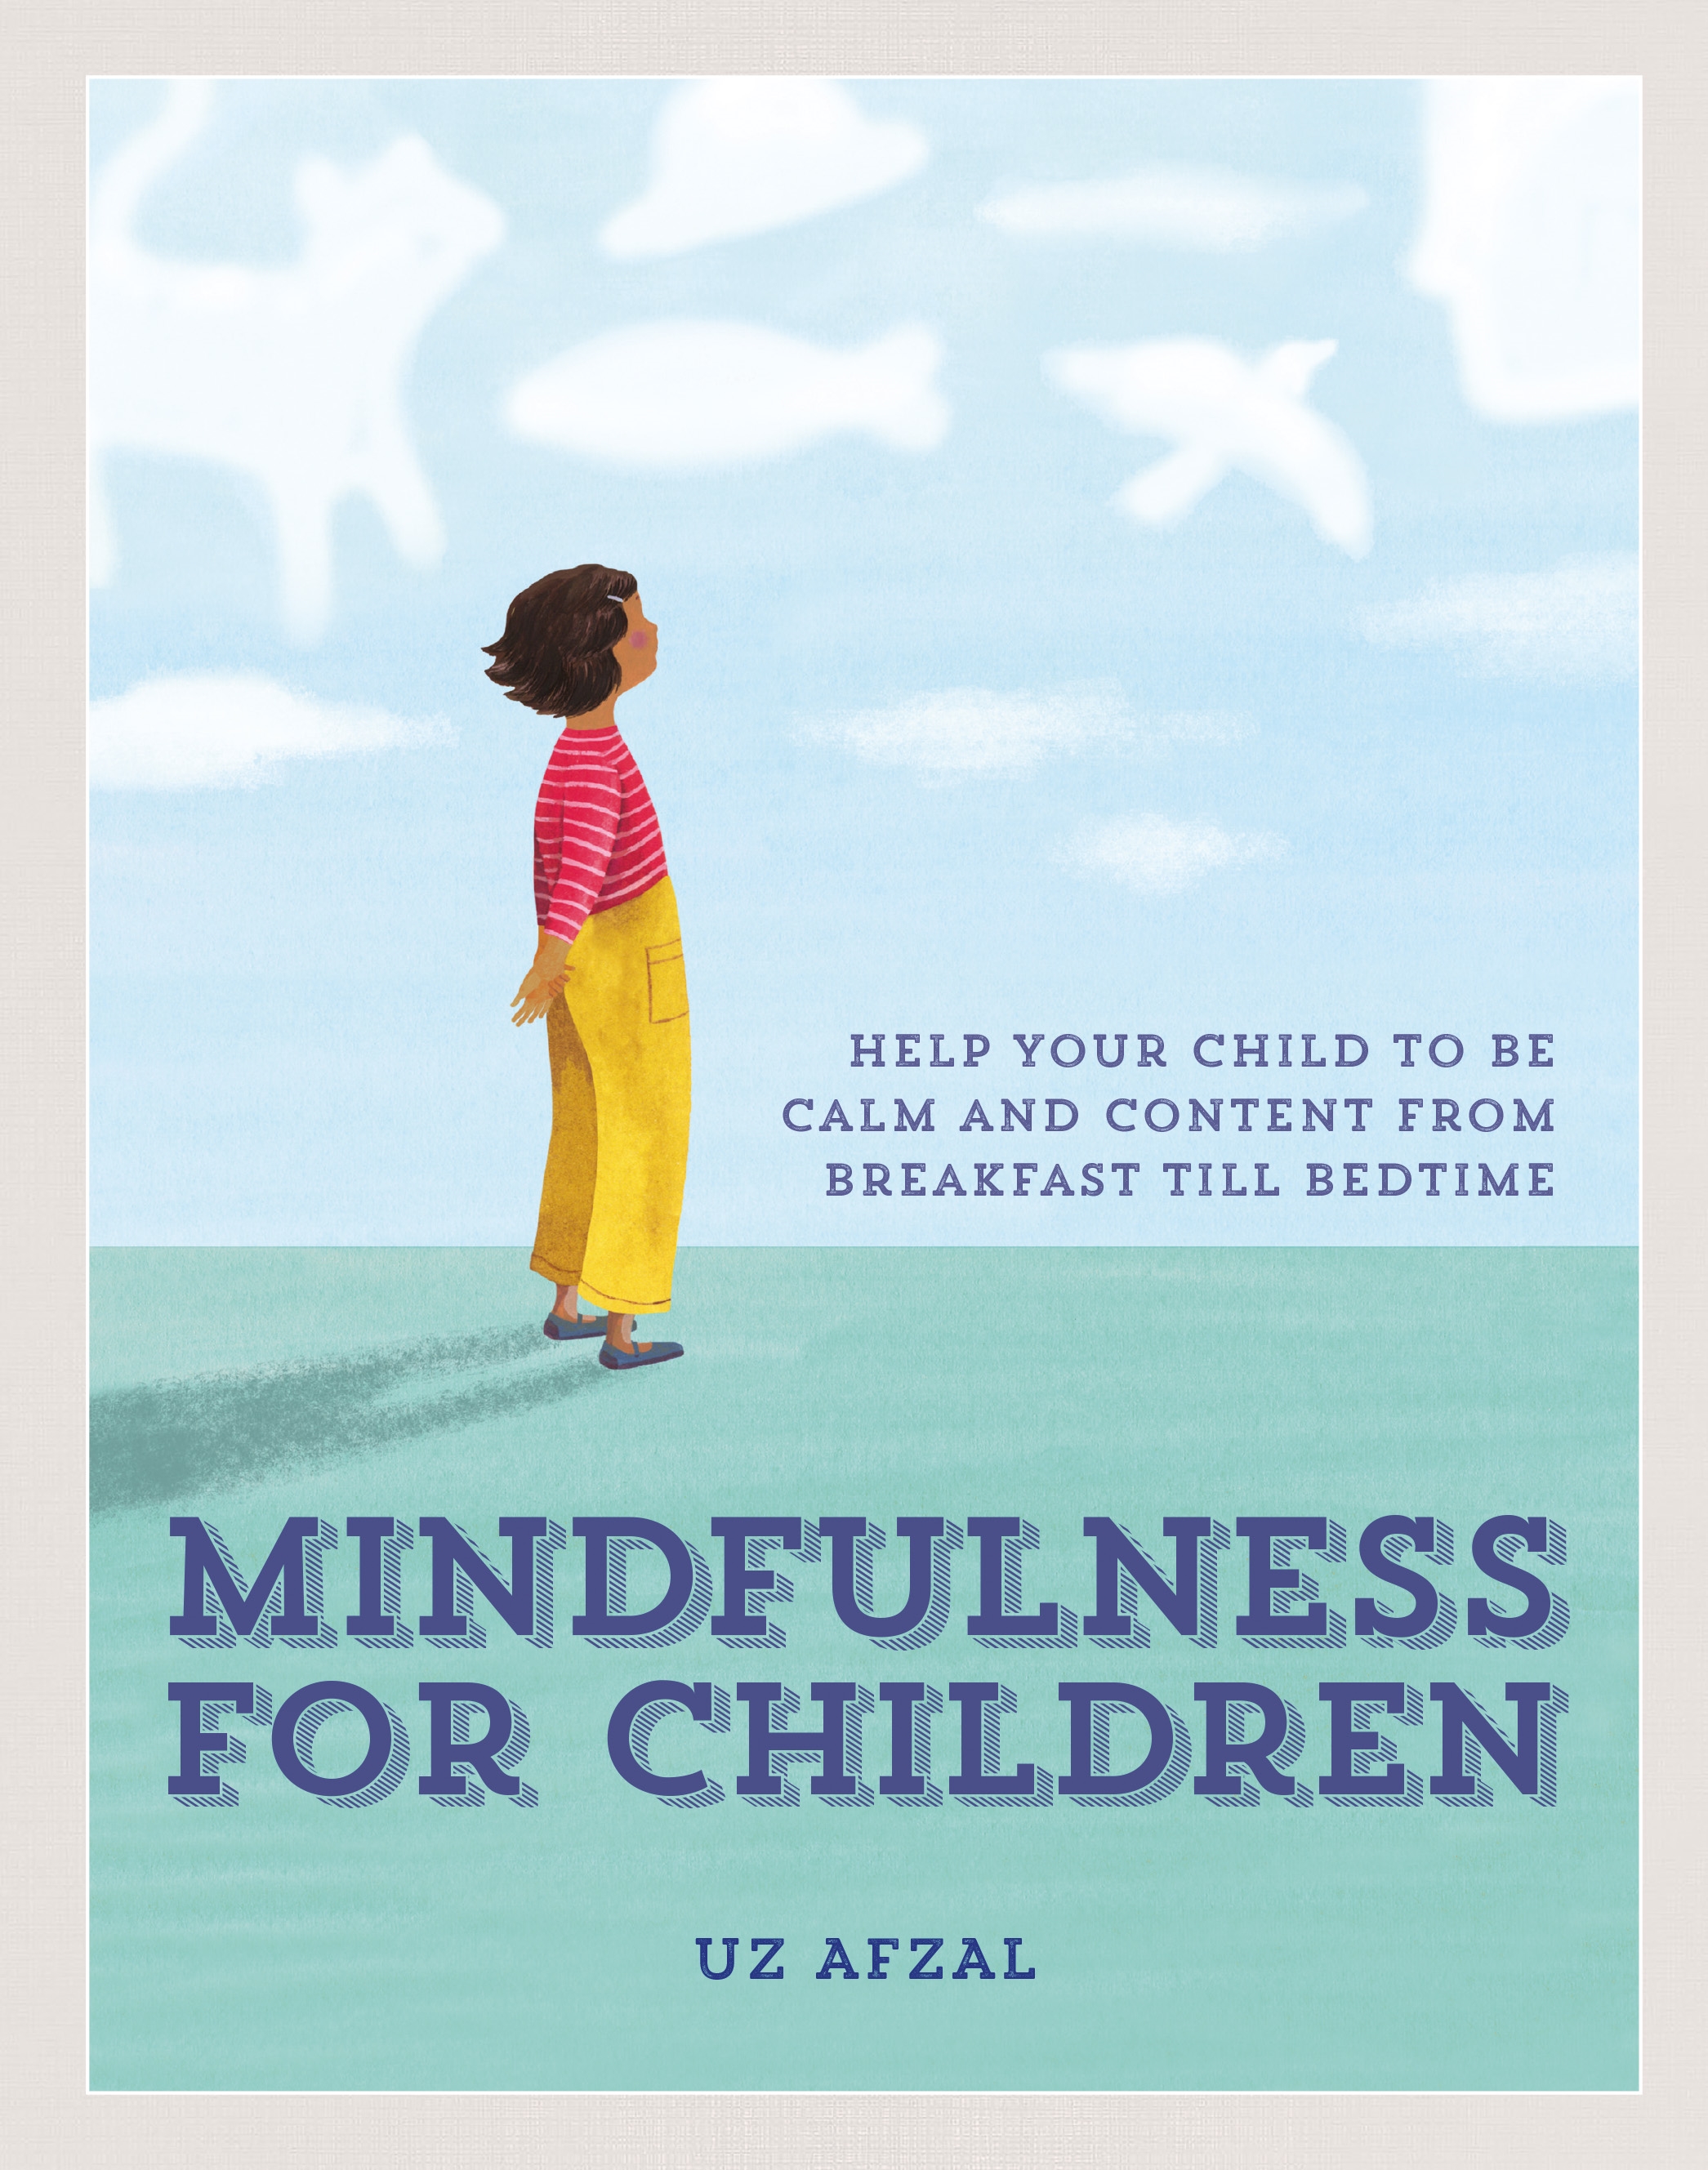 Mindfulness for Children